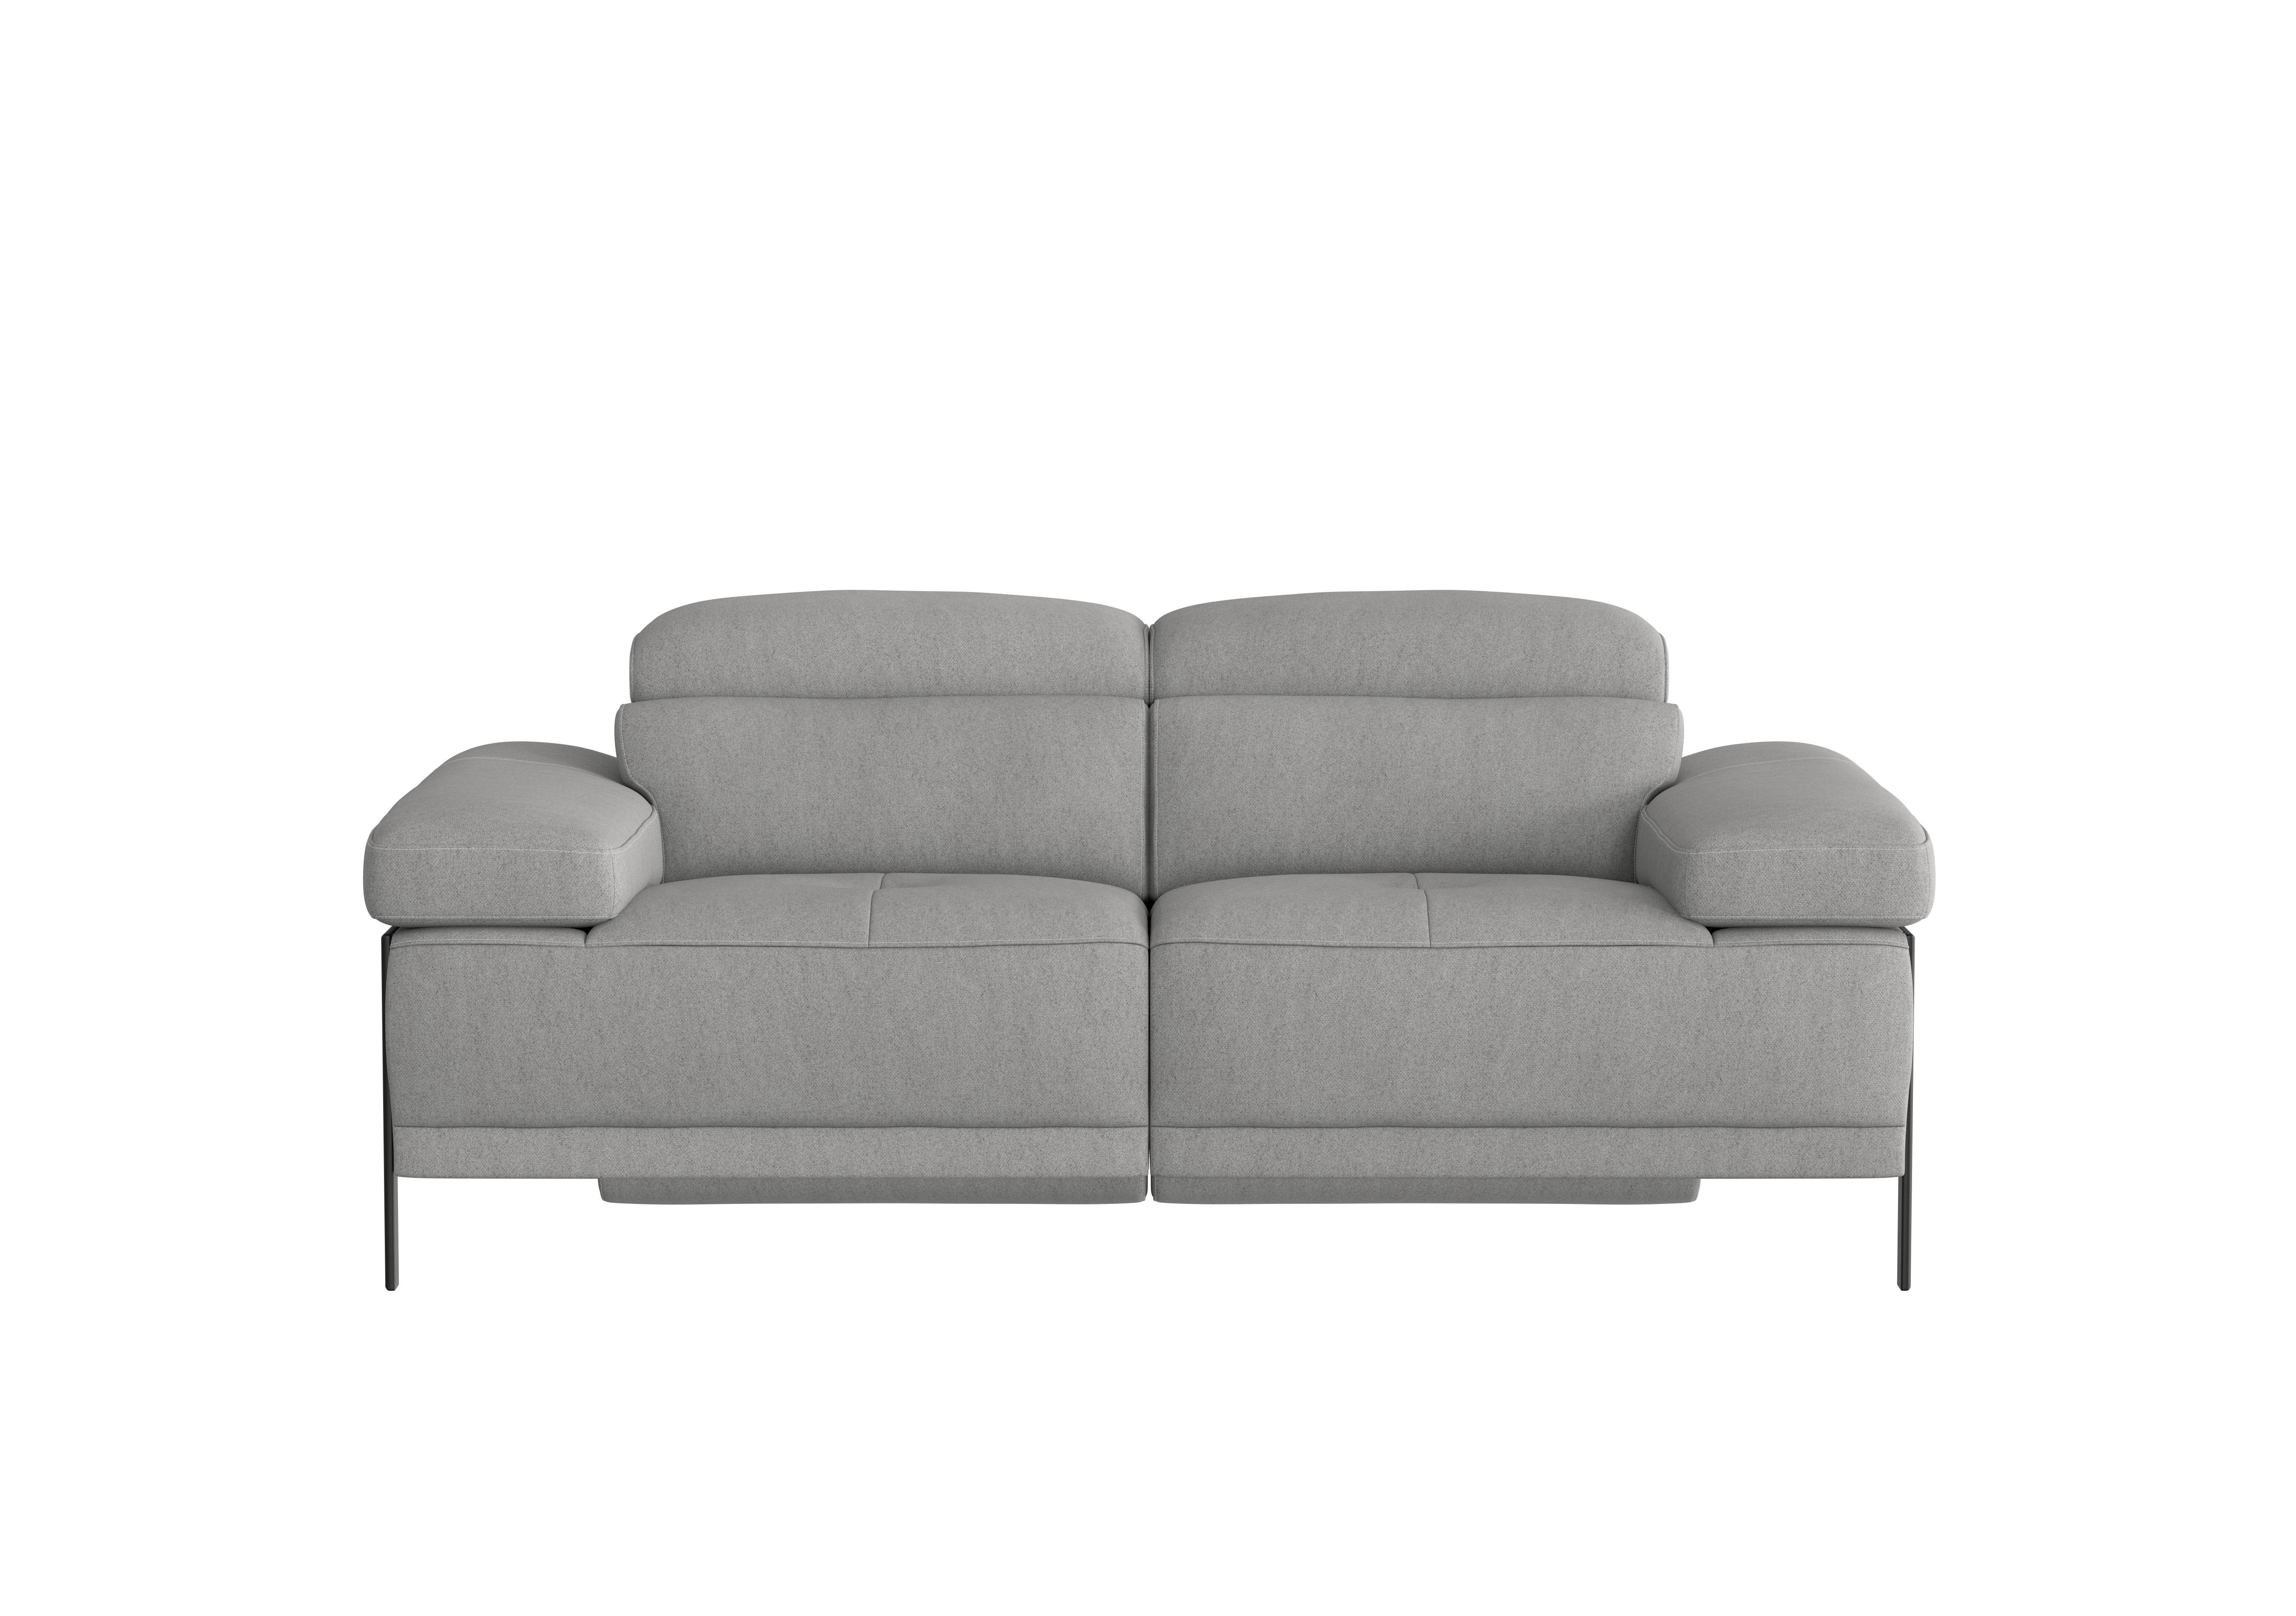 Theron 2 Seater Fabric Sofa in Fuente Ash Ti Ft on Furniture Village